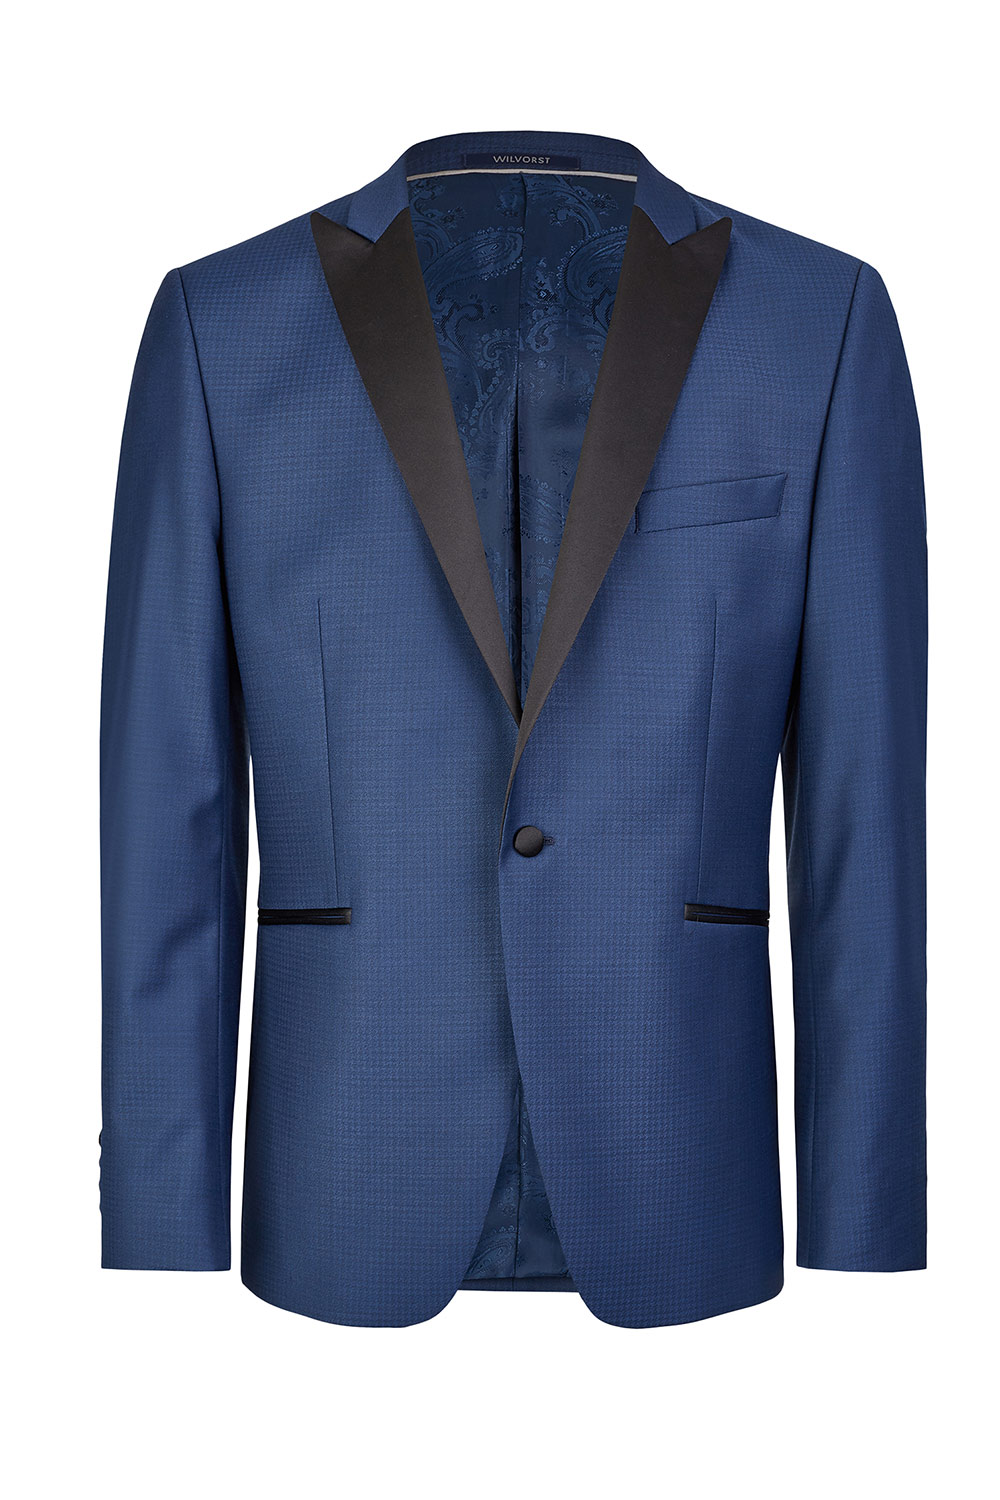 Petrol Blue Slim Fit Tuxedo - Tom Murphy's Formal and Menswear